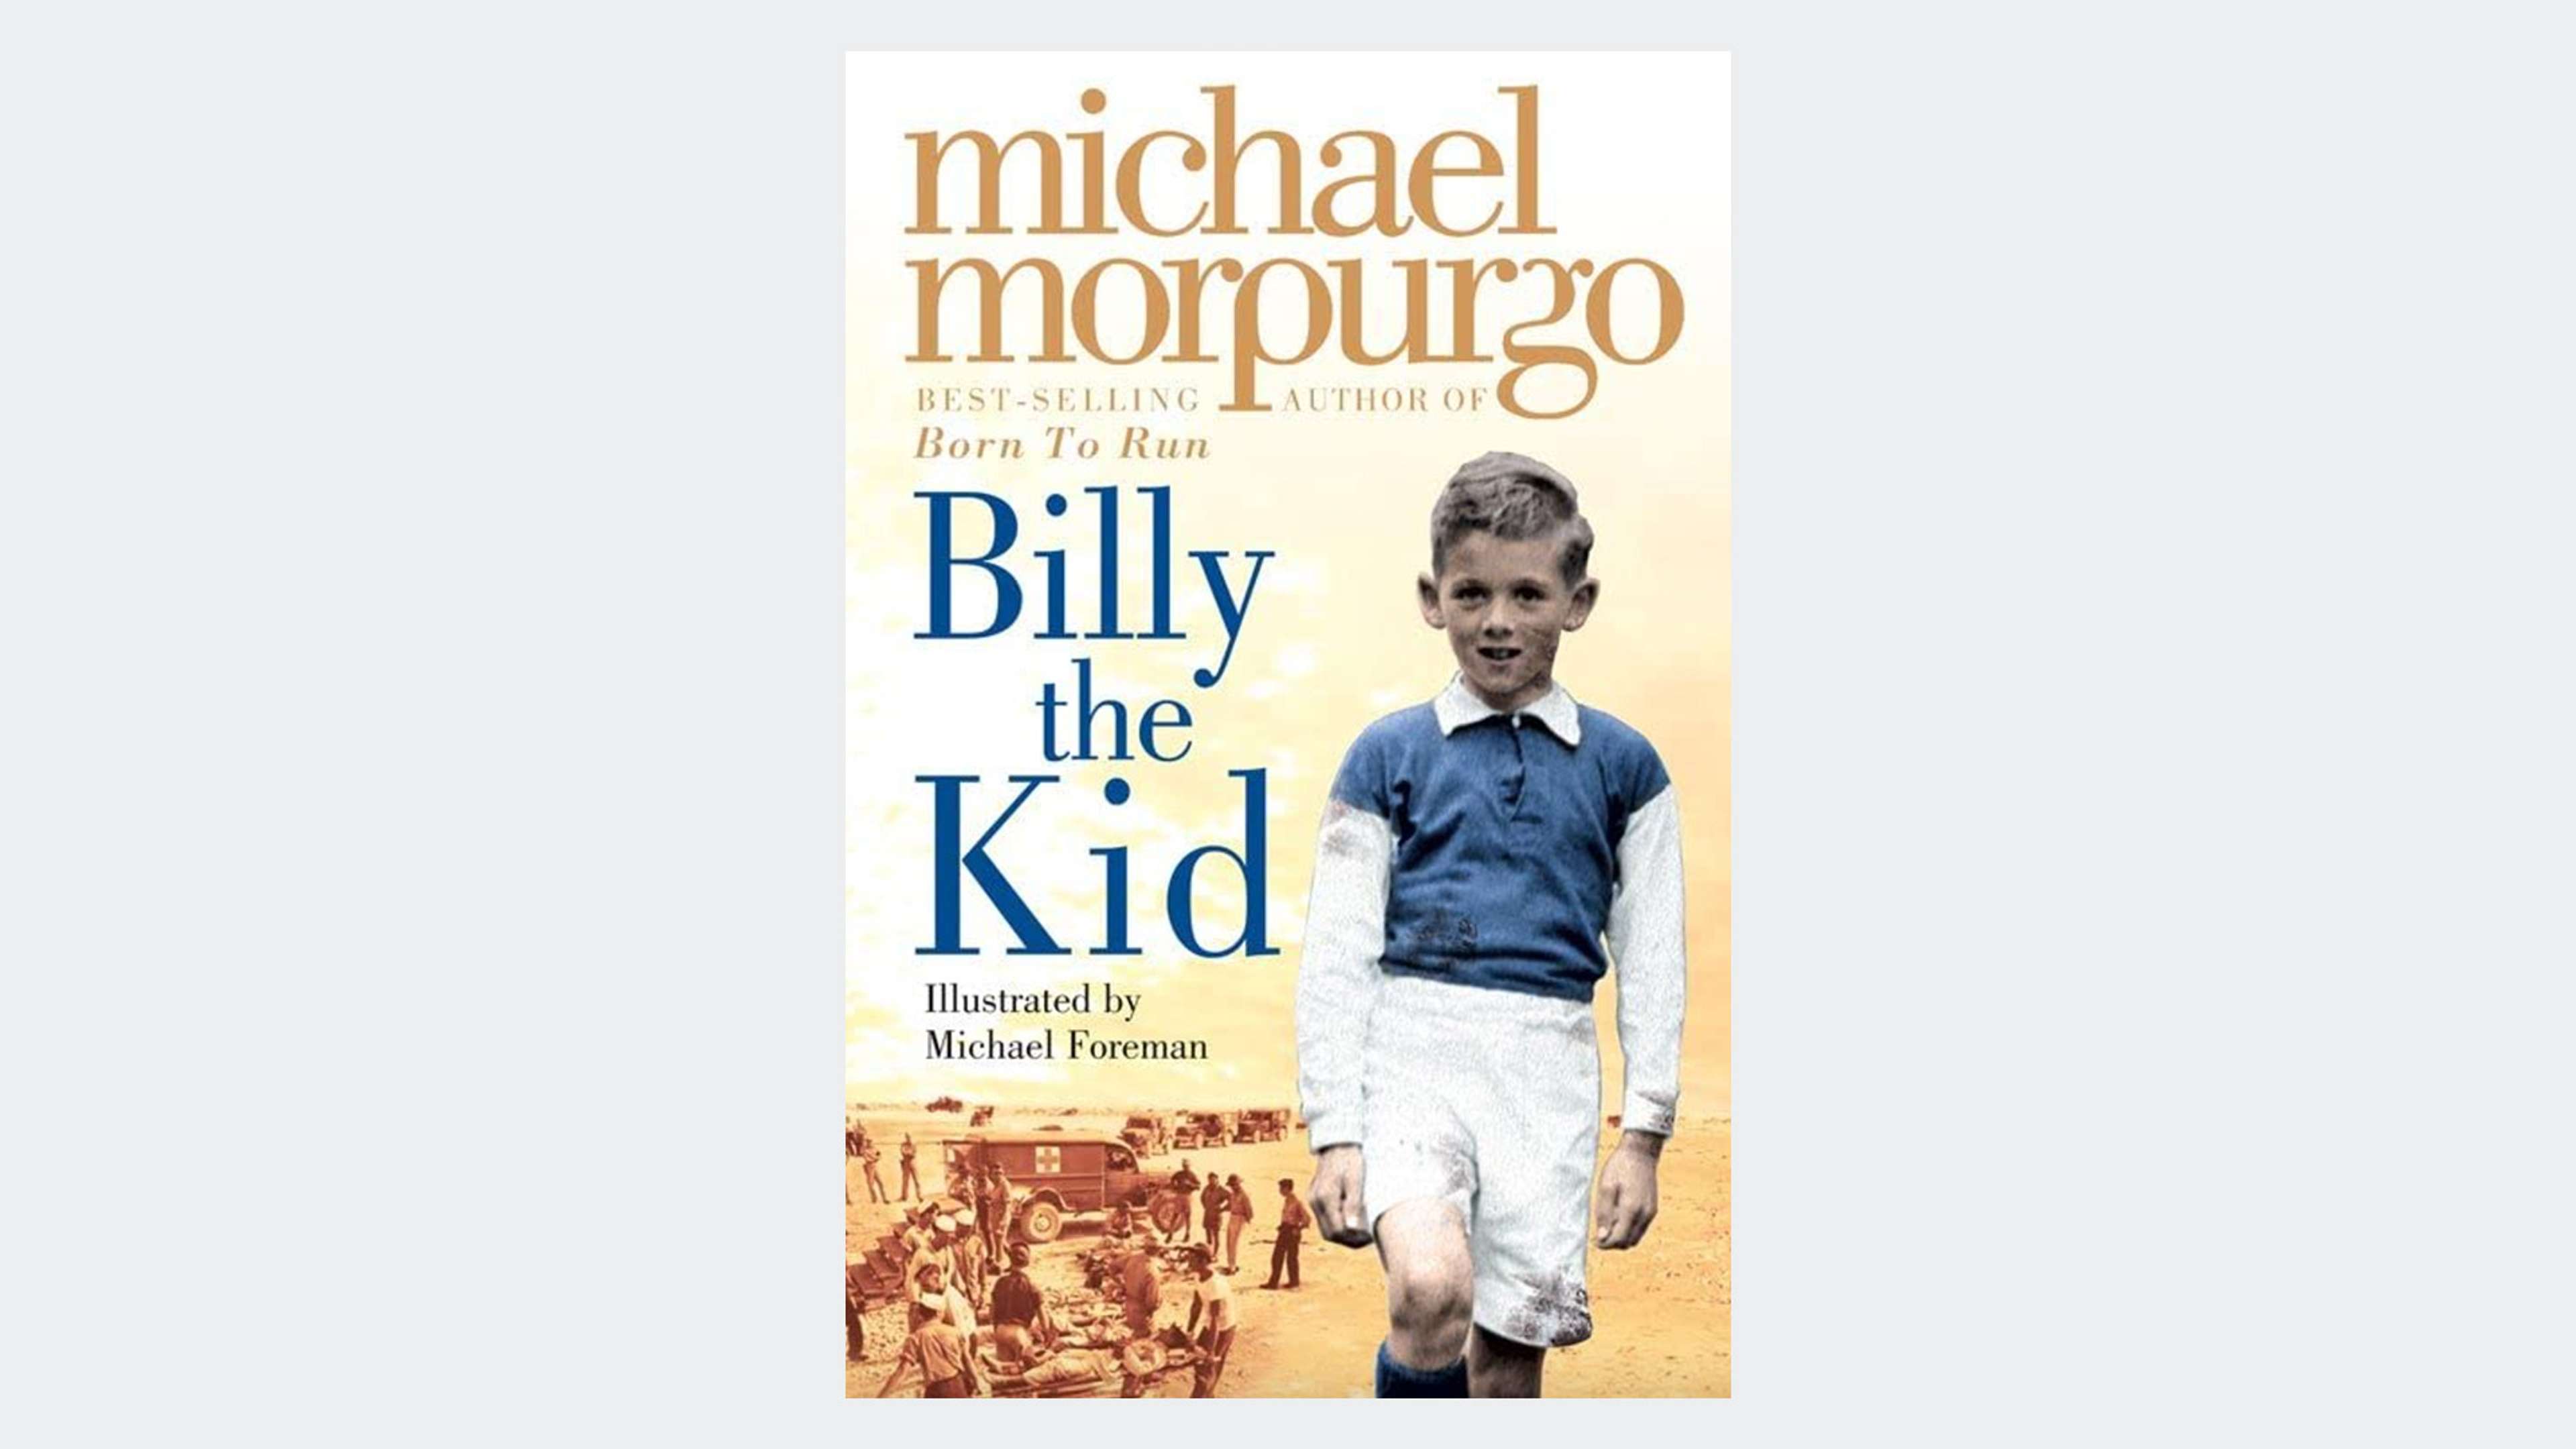 Billy the Kid by Michael Morpurgo